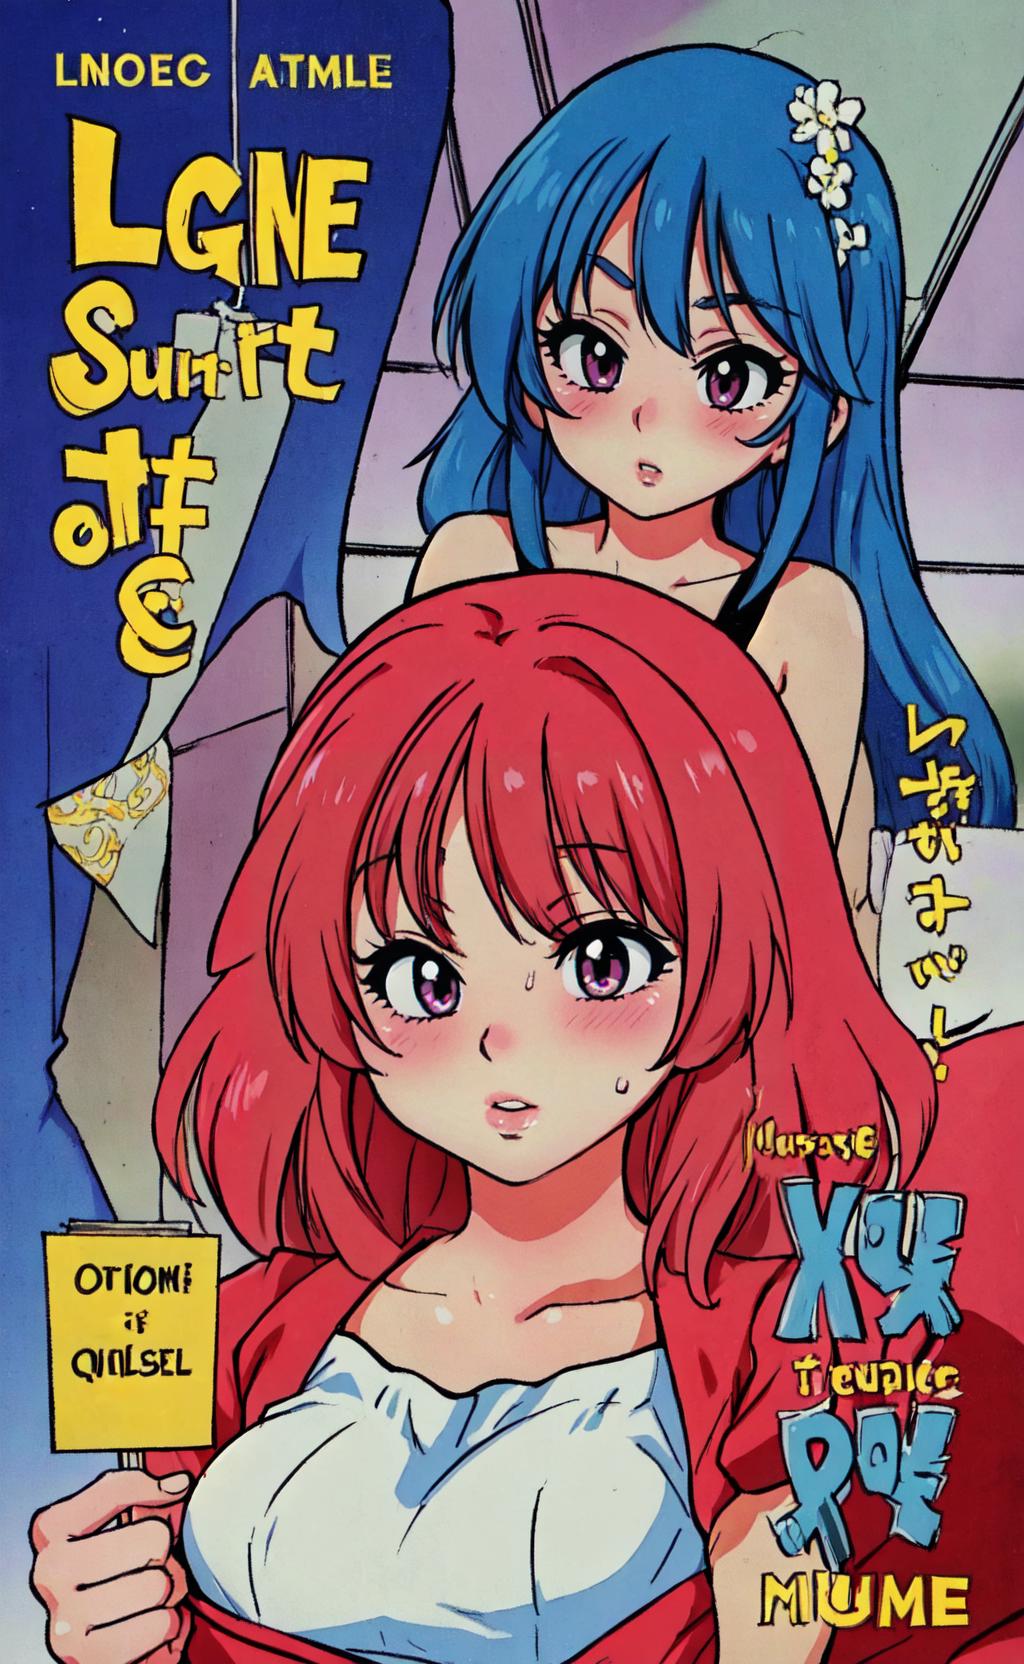 Pisu Hame! Style - (Anime/Hentai) image by NostalgiaForever